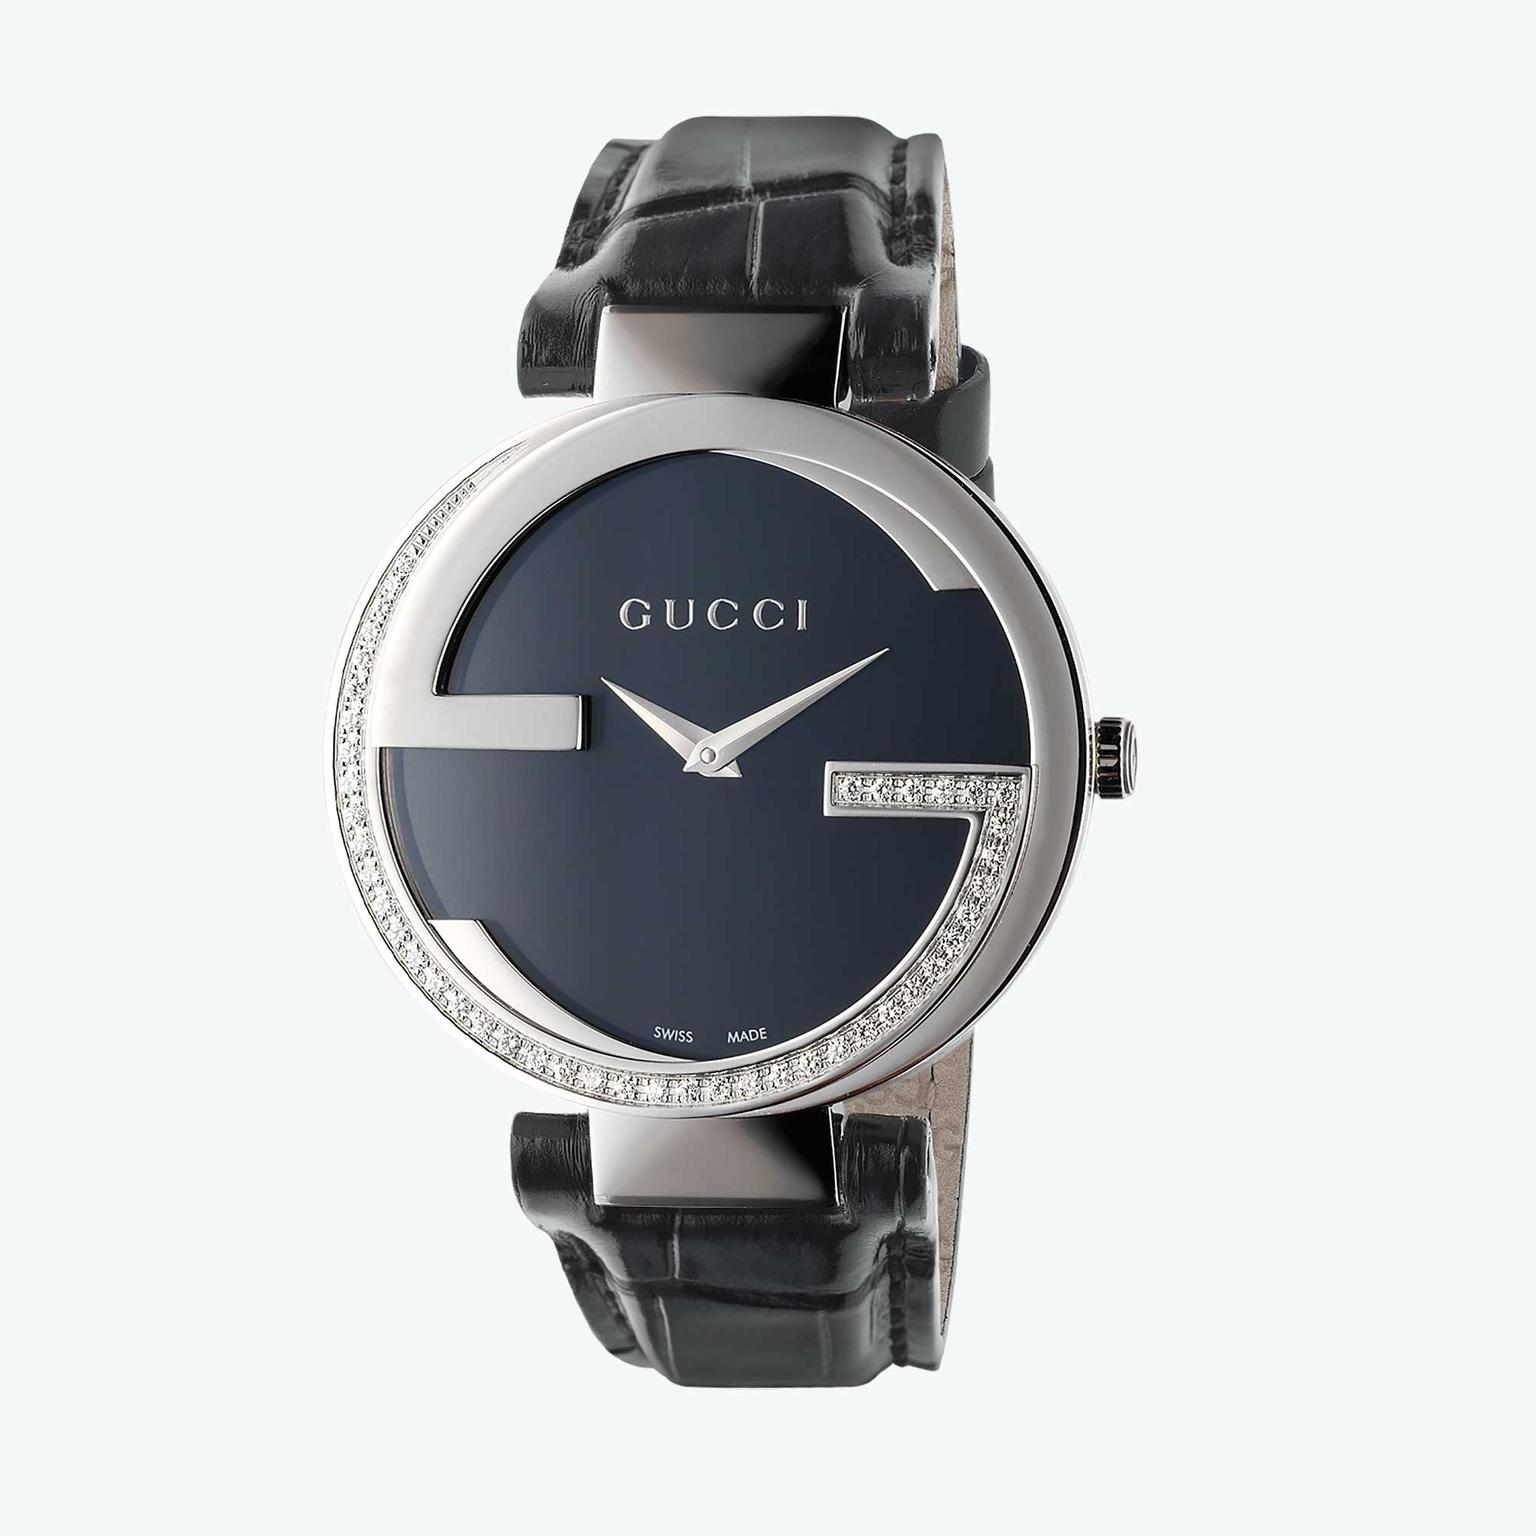 Gucci Interlocking G watch with 45 diamonds